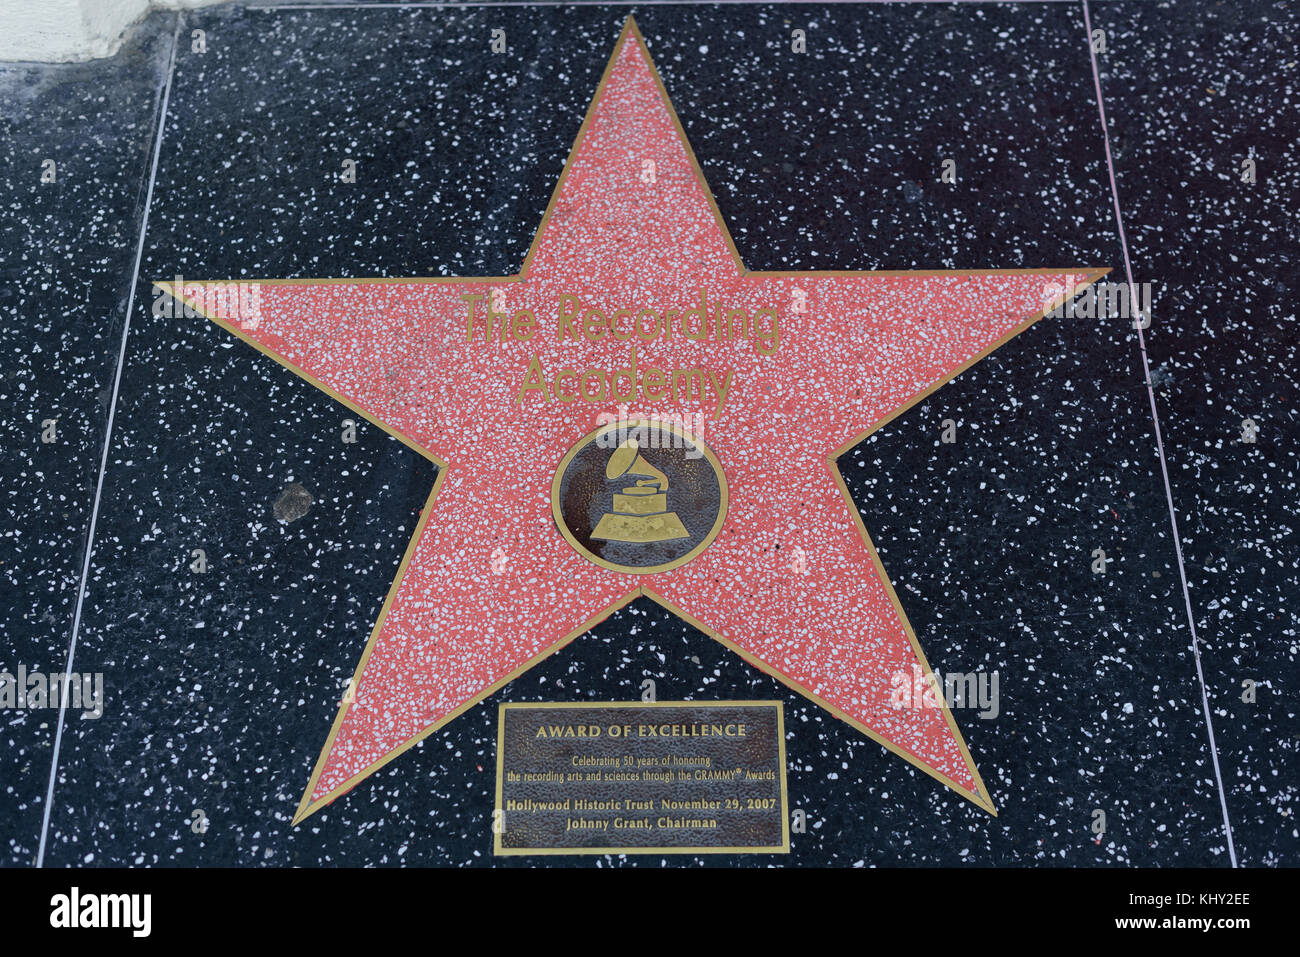 HOLLYWOOD, CA - DEZEMBER 06: Der Star der Recording Academy auf dem Hollywood Walk of Fame in Hollywood, Kalifornien am 6. Dezember 2016. Stockfoto